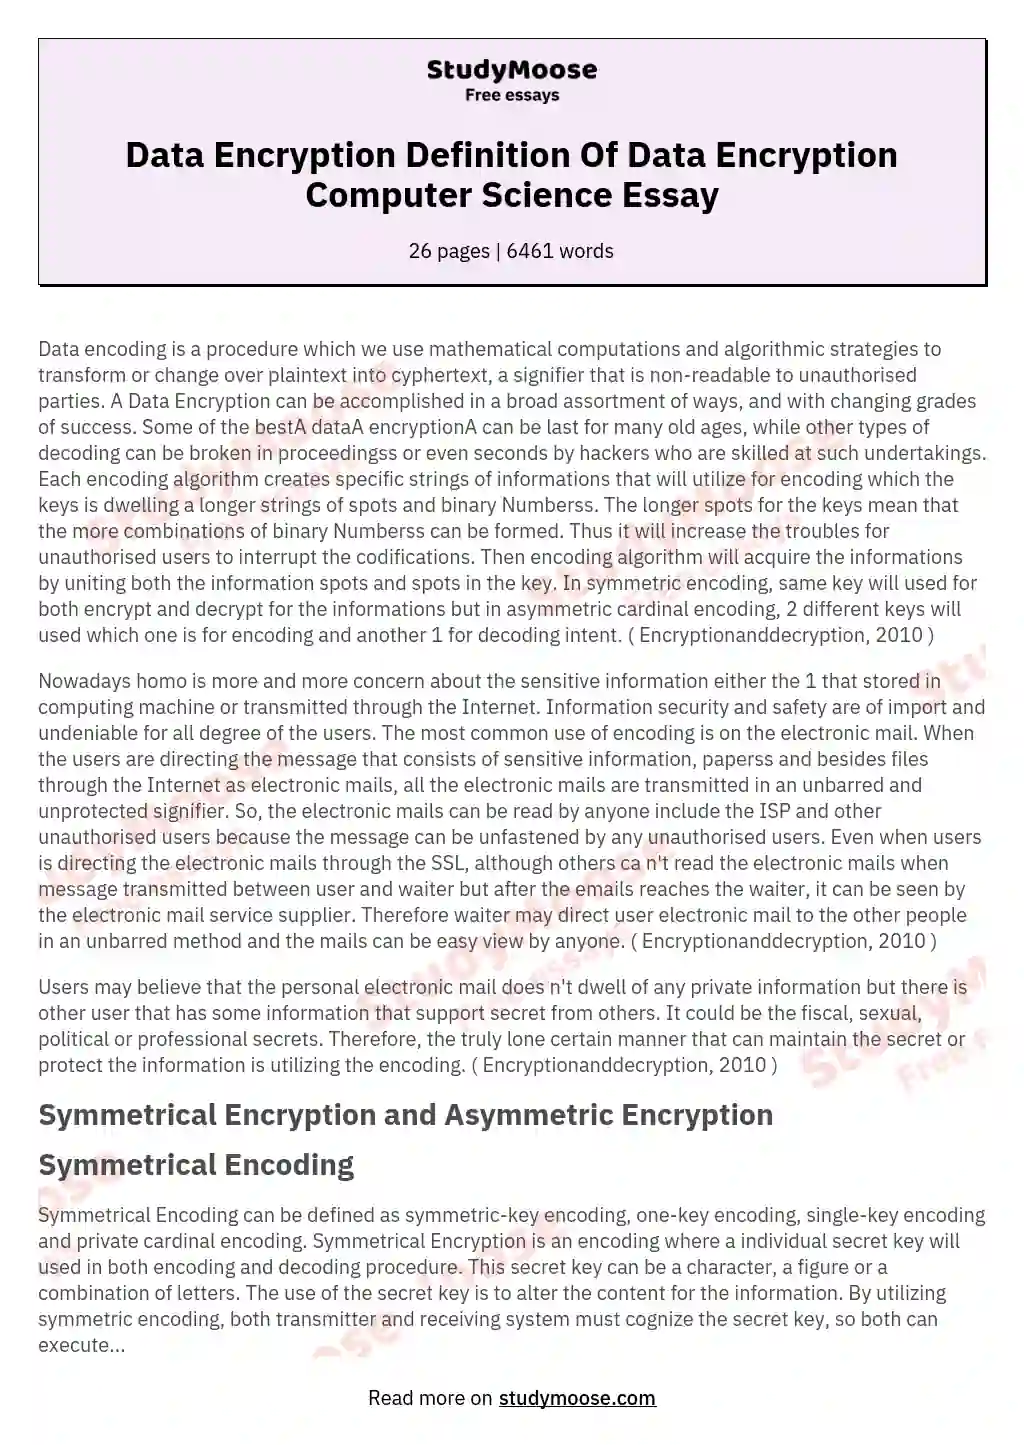 Data Encryption Definition Of Data Encryption Computer Science Essay essay